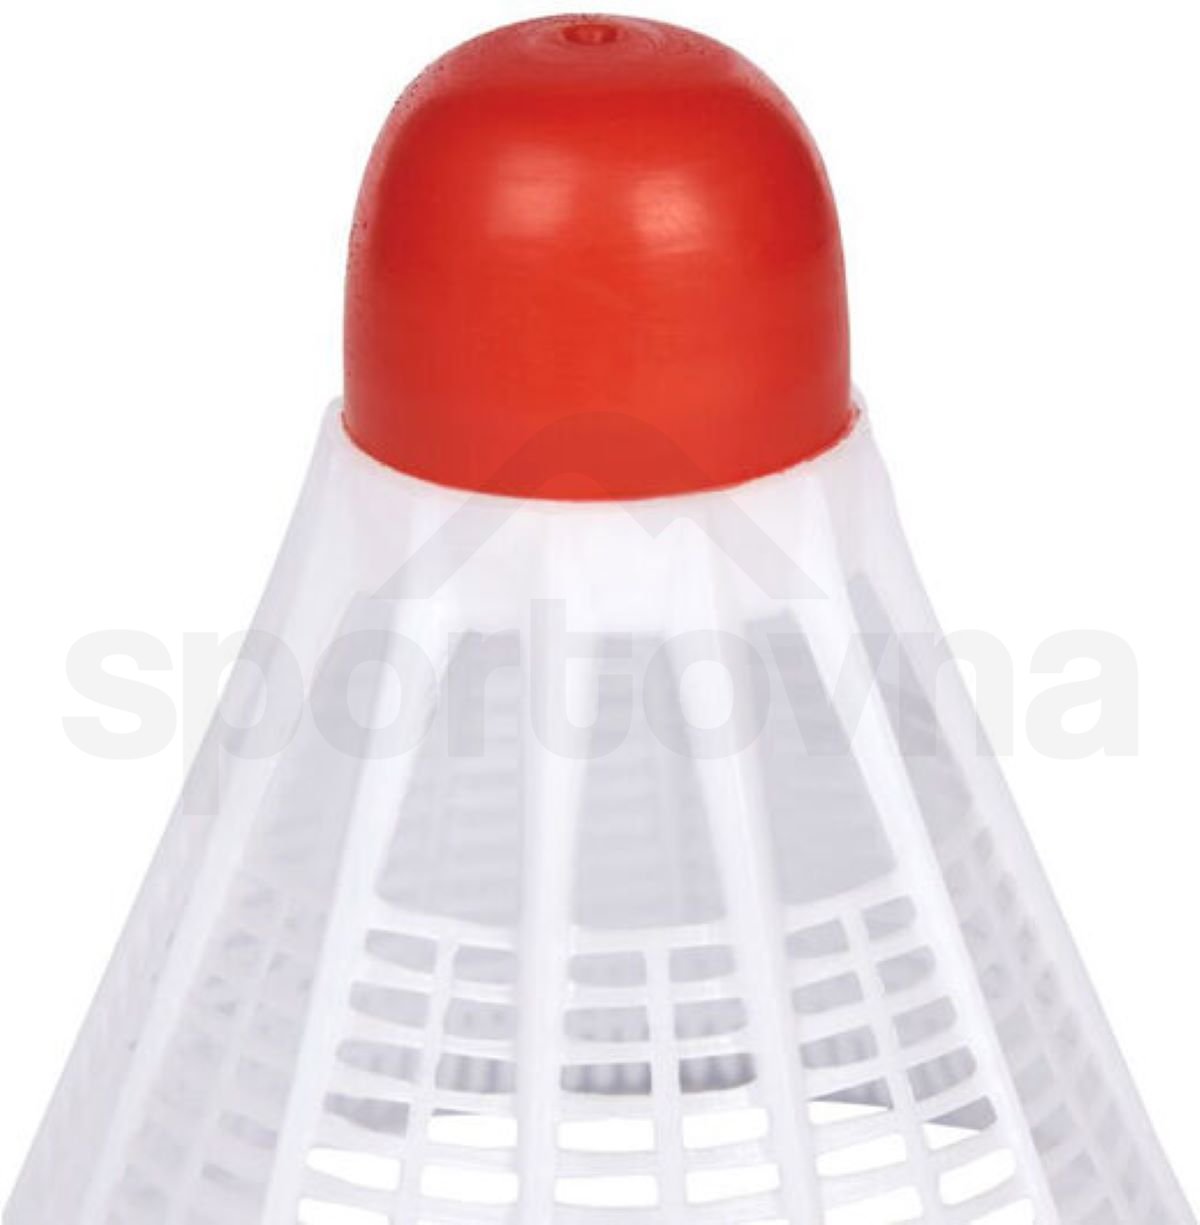 Badmintonový míček ProTouch SP 100 - bílá/červená